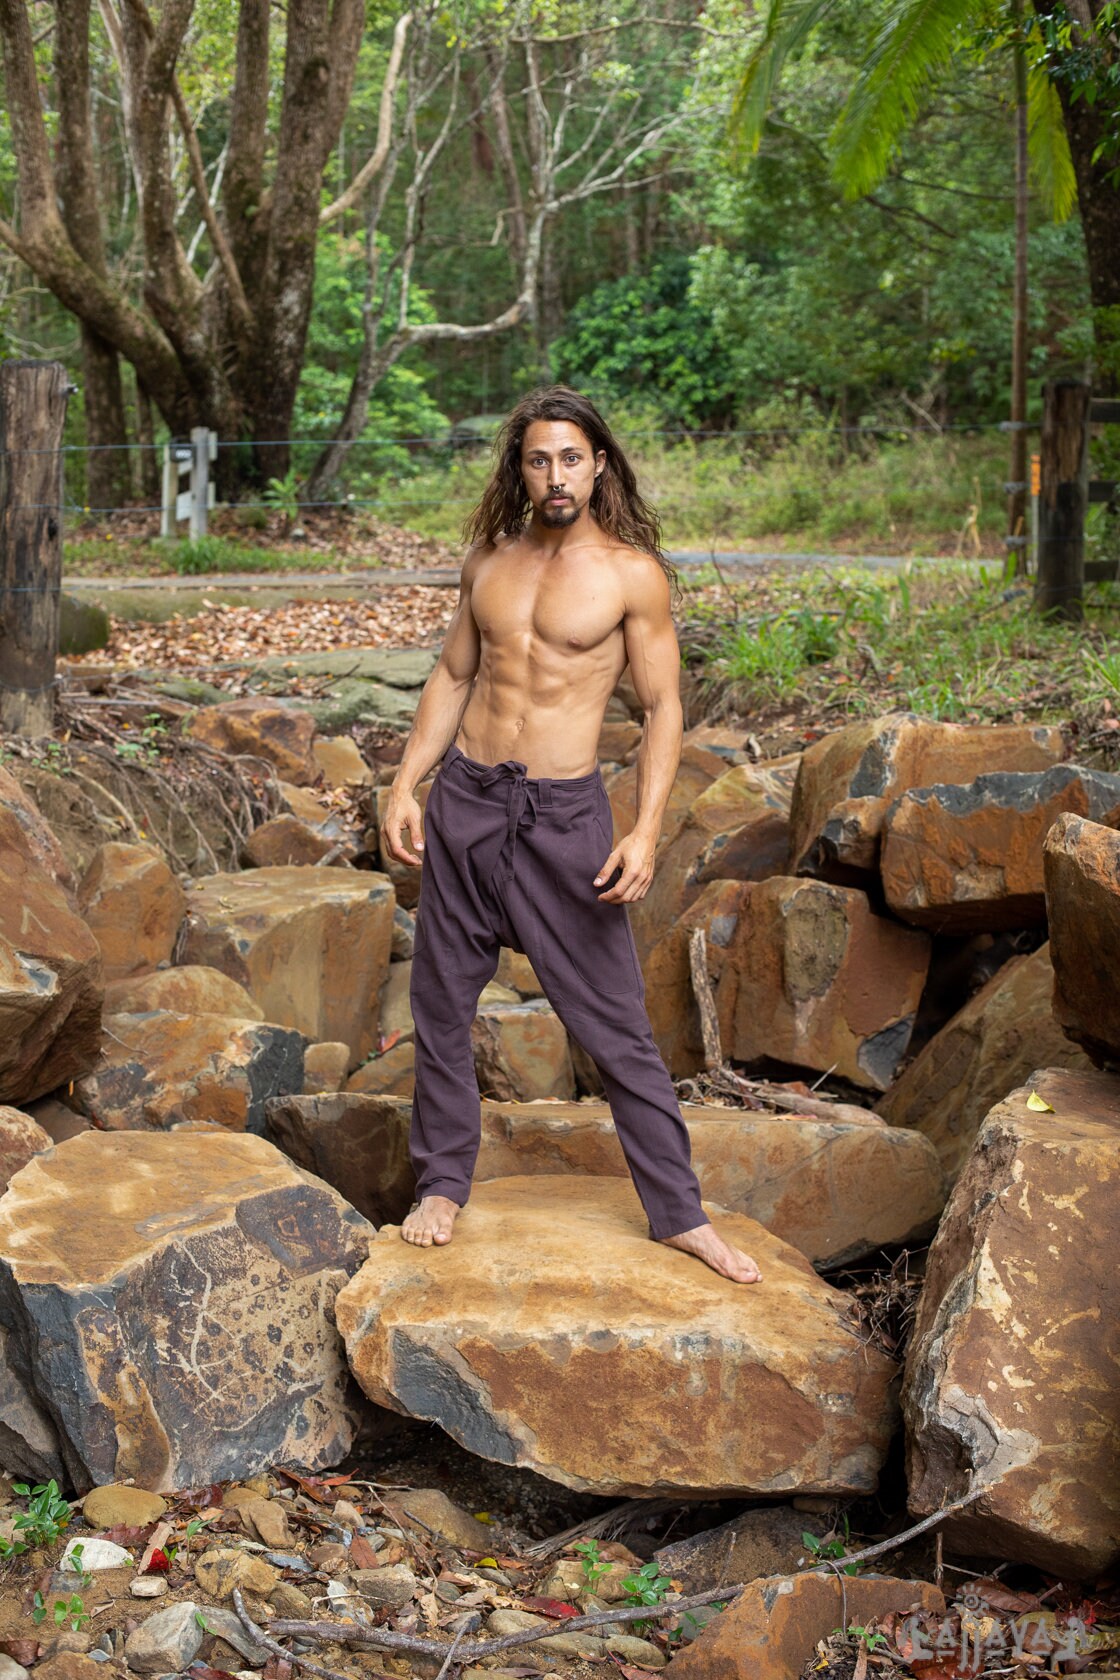 Mens Cotton Pants Grey Drop Crotch Harem Alibaba Yoga Comfortable Breathable One Size Loose Fit Festival Boho Hippie Natural Earthy AJJAYA